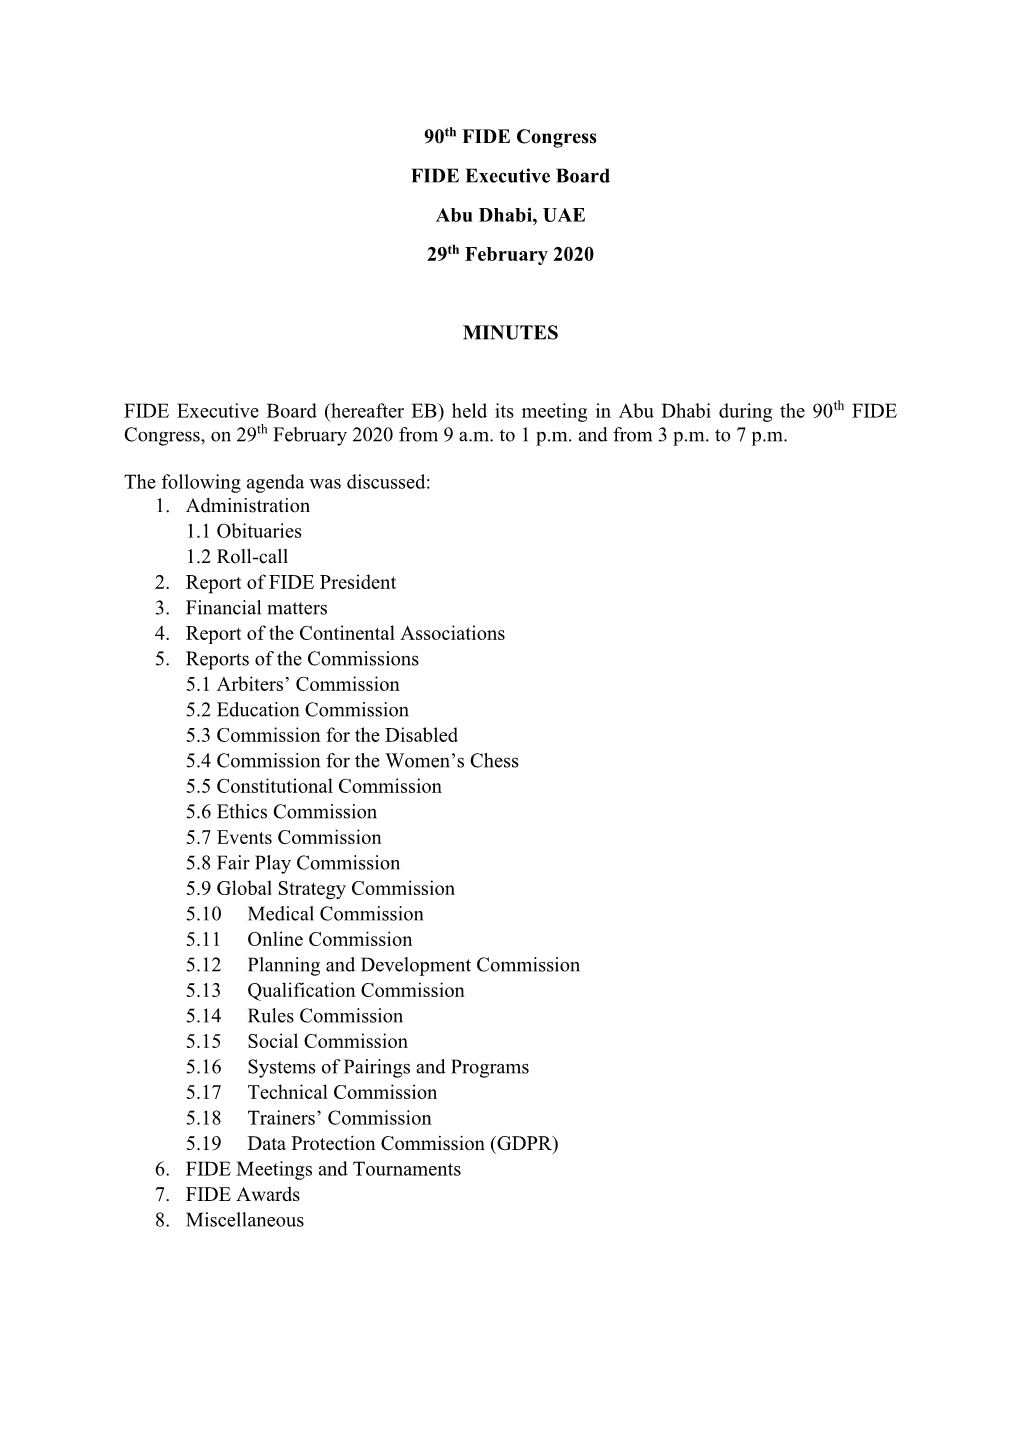 2020 FIDE Executive Board Minutes